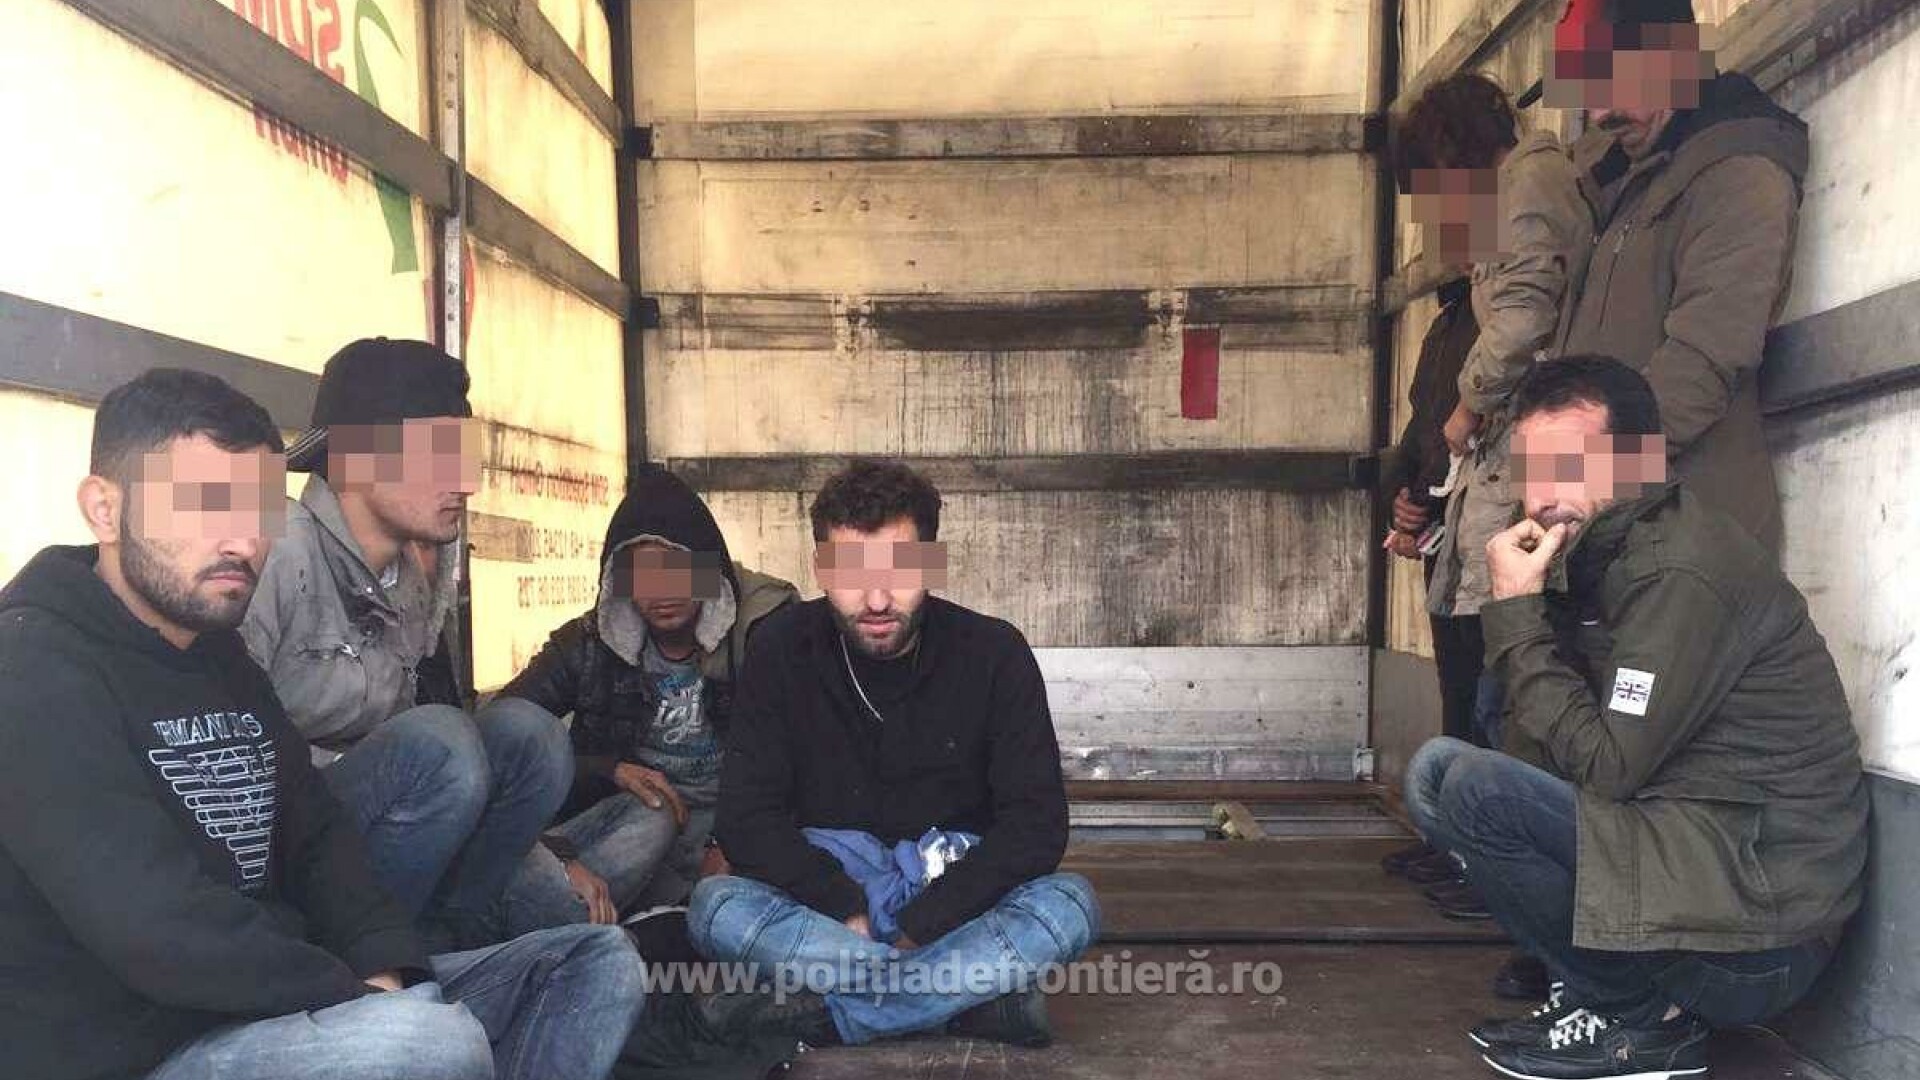 migranti irakieni gasiti in camion